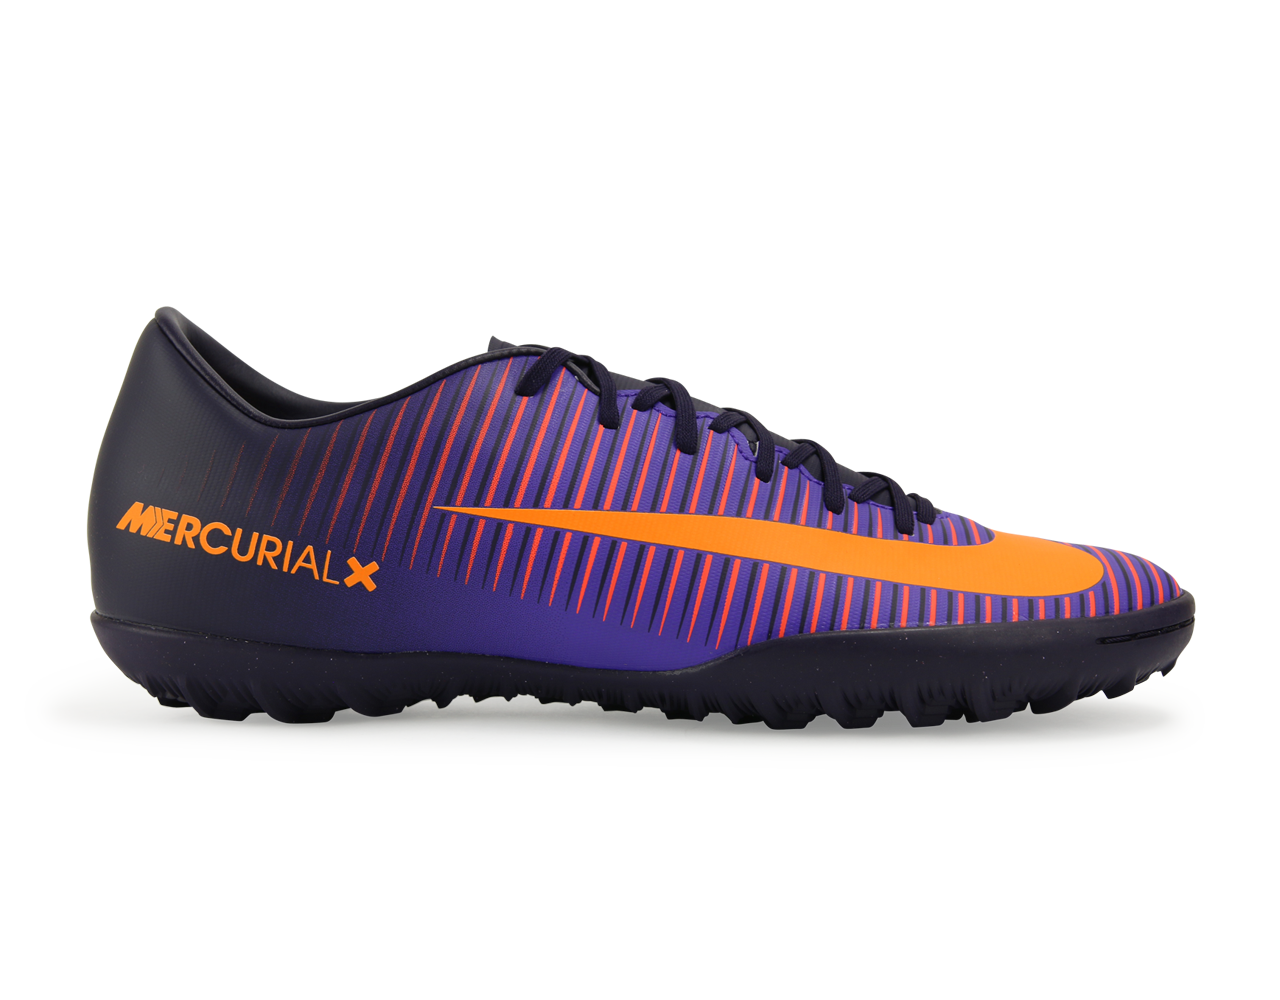 Nike Men's MercurialX Victory VI Turf Soccer Shoes Purple Dynasty/Bright Citrus/Hyper Grape